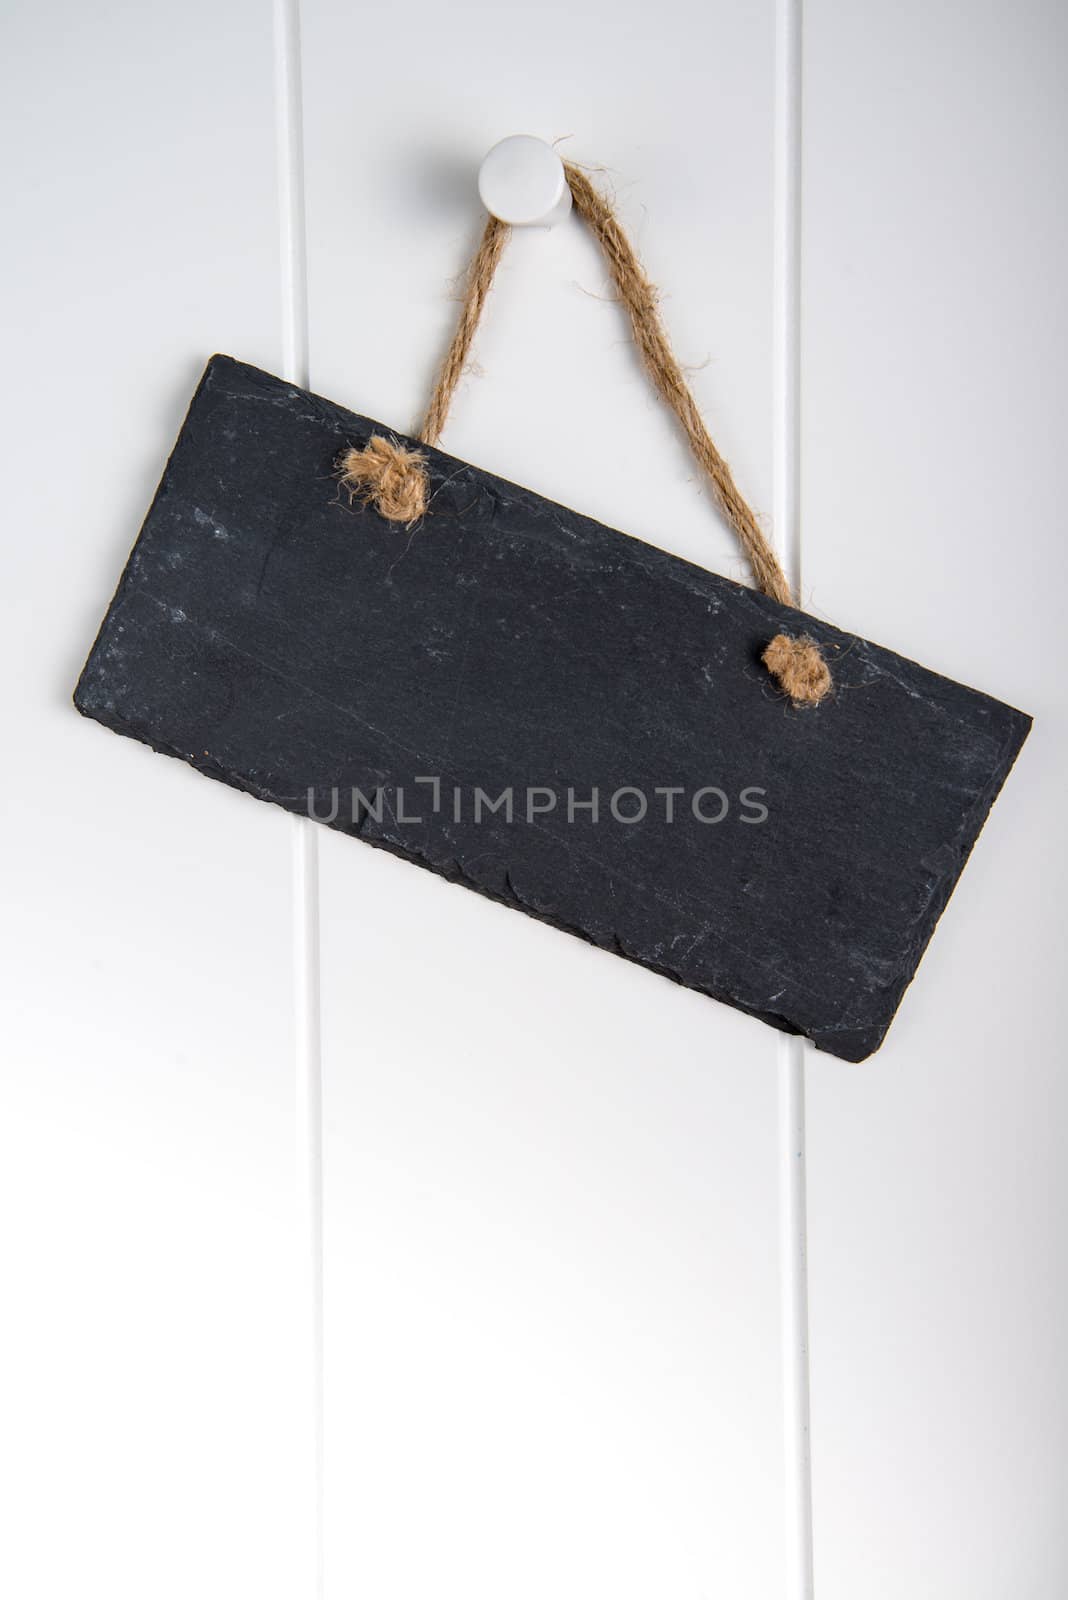 Black stone slate blank sign hanging on white wooden door